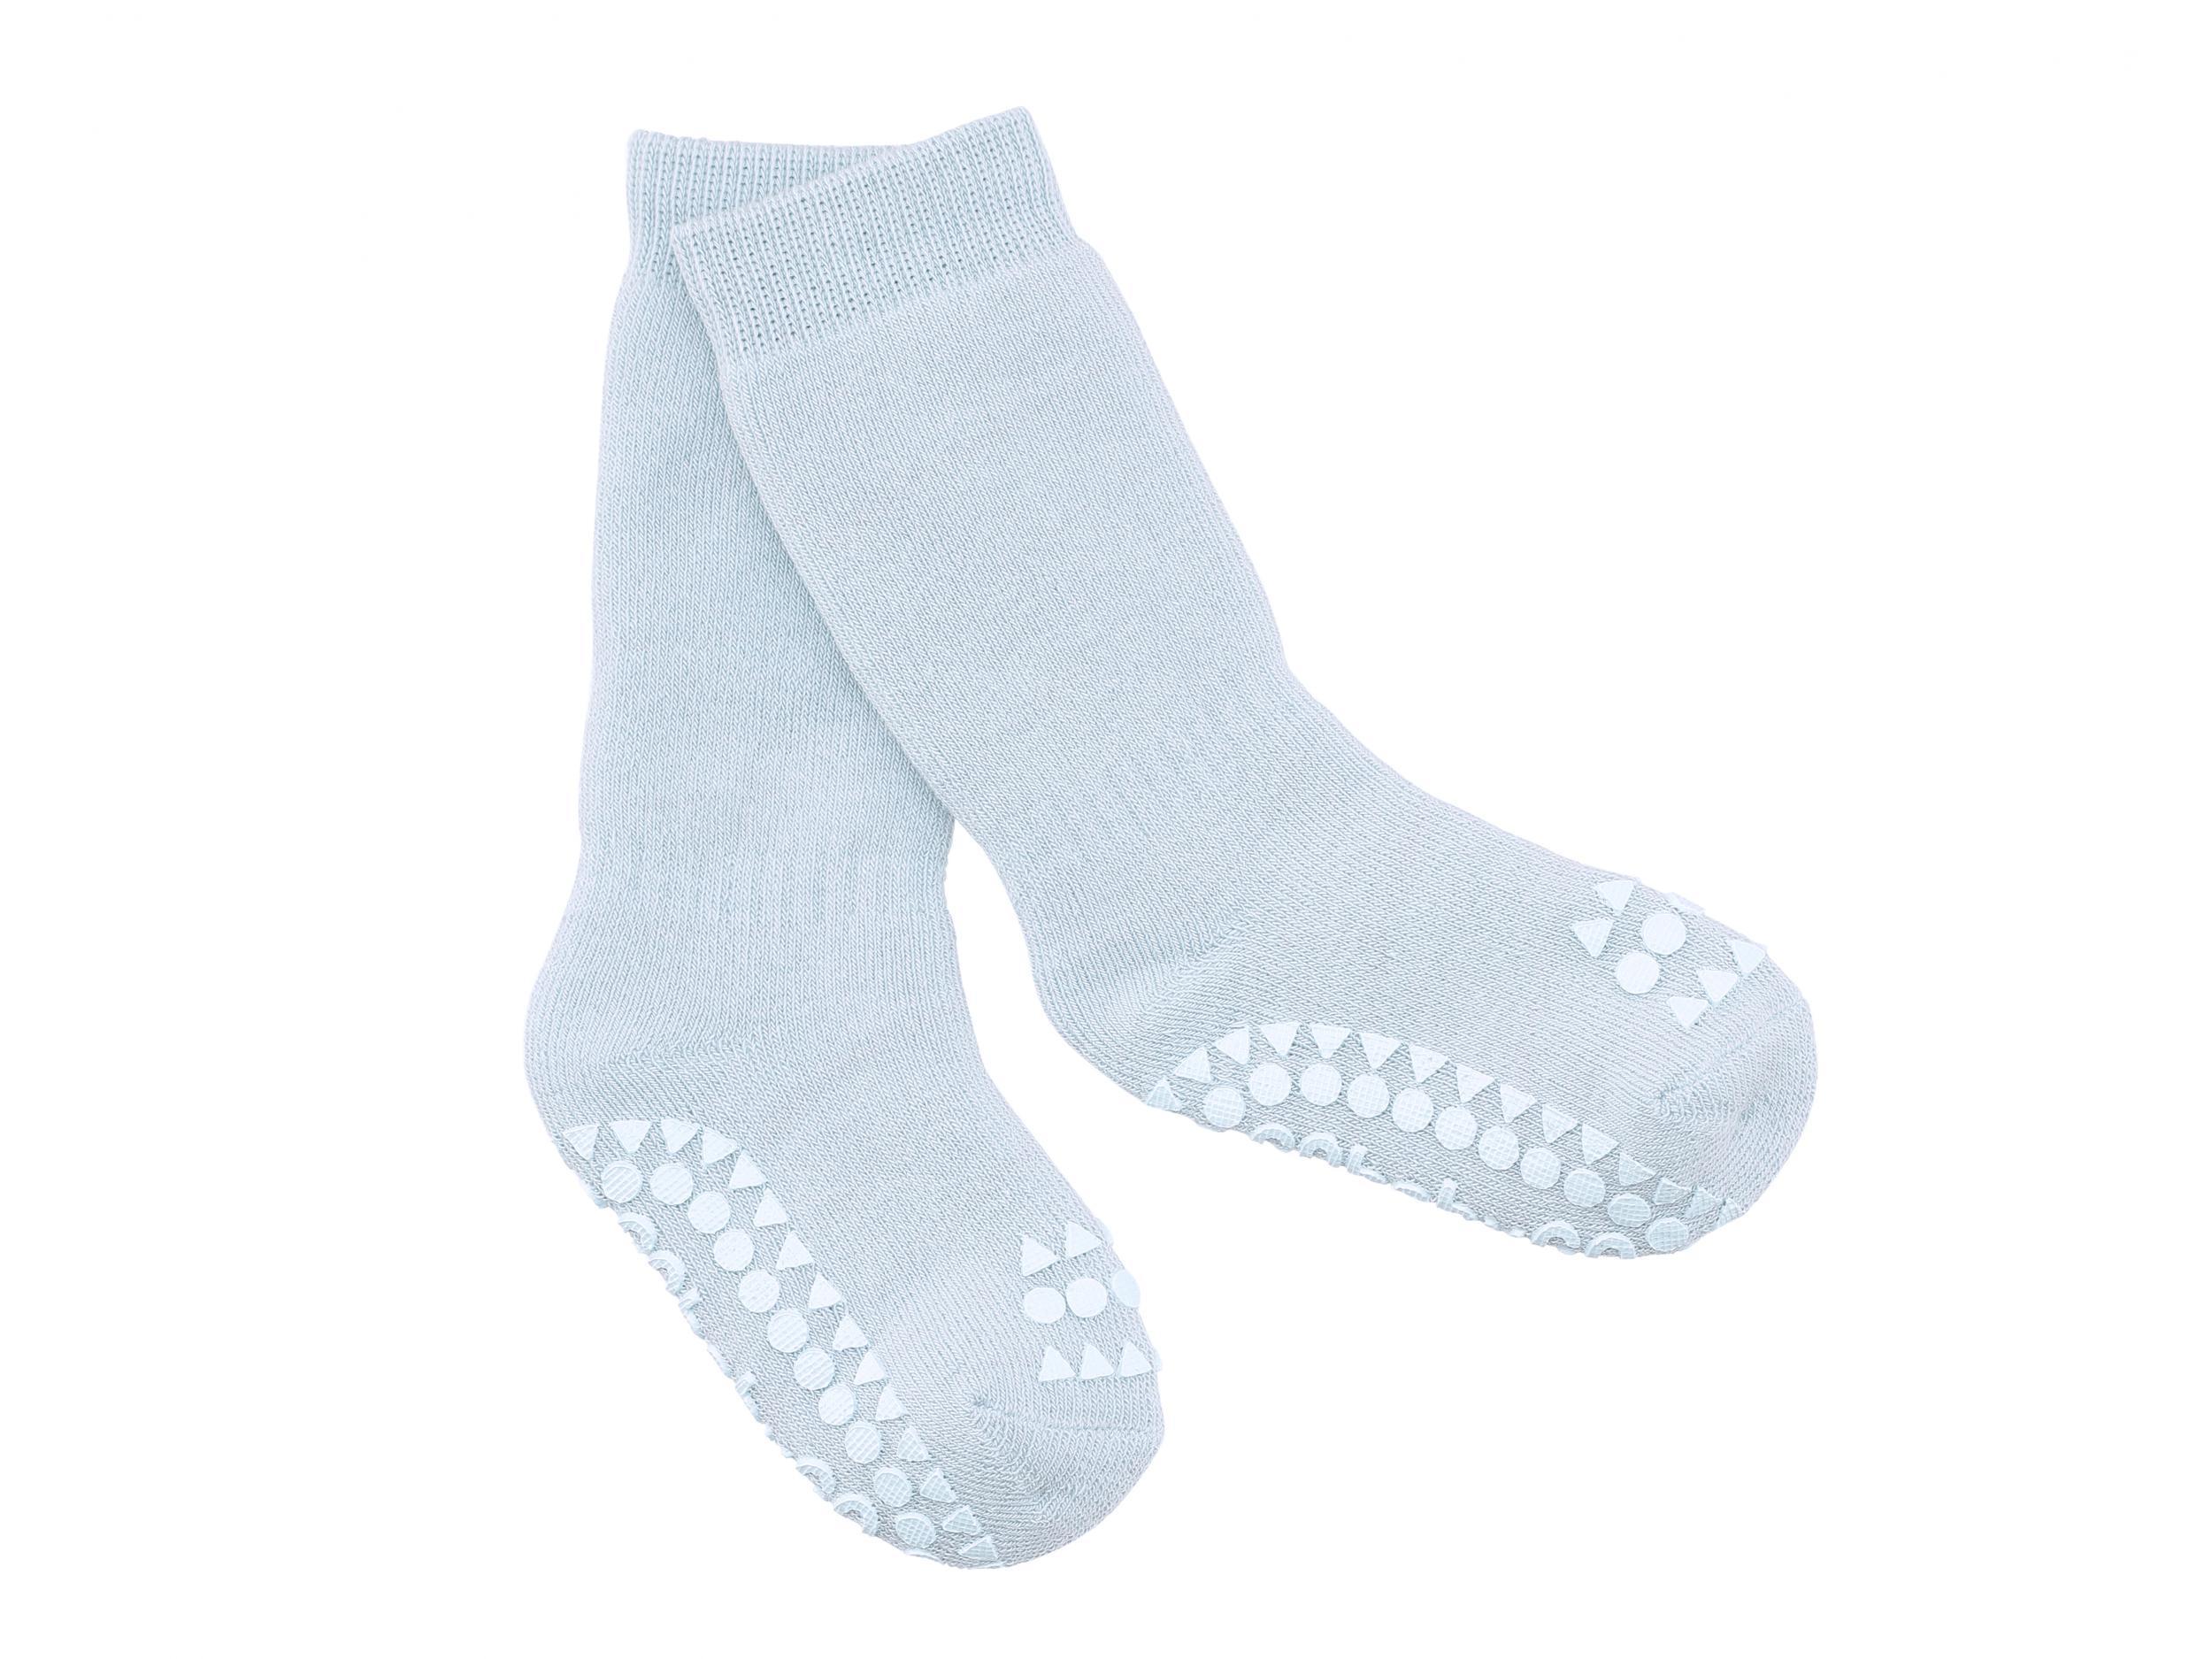 12 Pairs Grip Ankle Socks Cozy Warm Socks Baby Toddler Infant Newborn Kids Boys Girls Non Slip/Anti Skid for 1-5 Years 